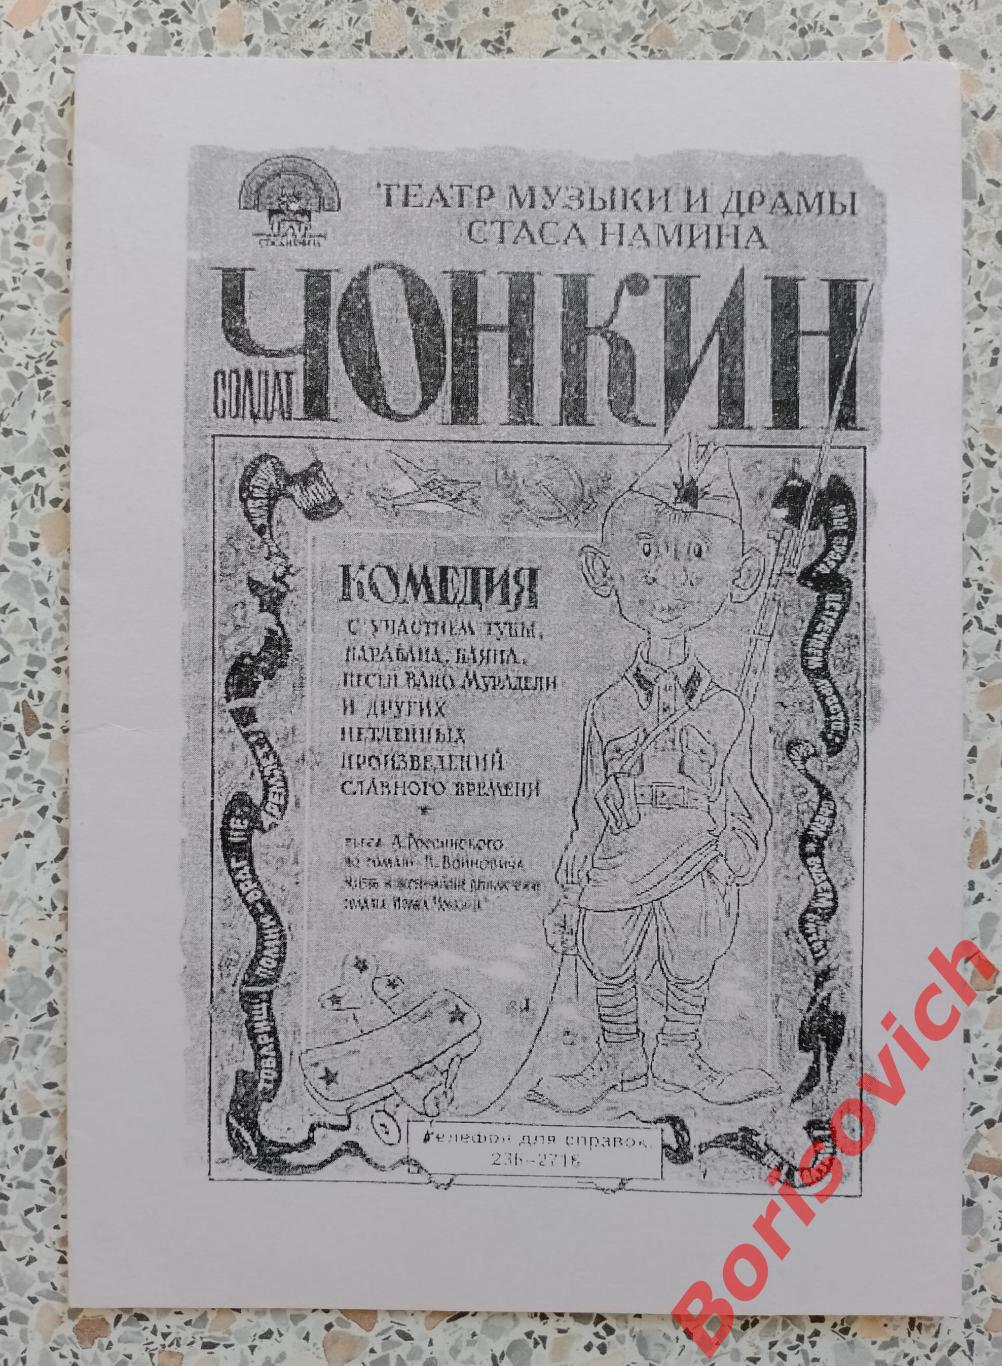 Программа Театр Музыки и Драмы Стаса Намина СОЛДАТ ЧОНКИН 2002